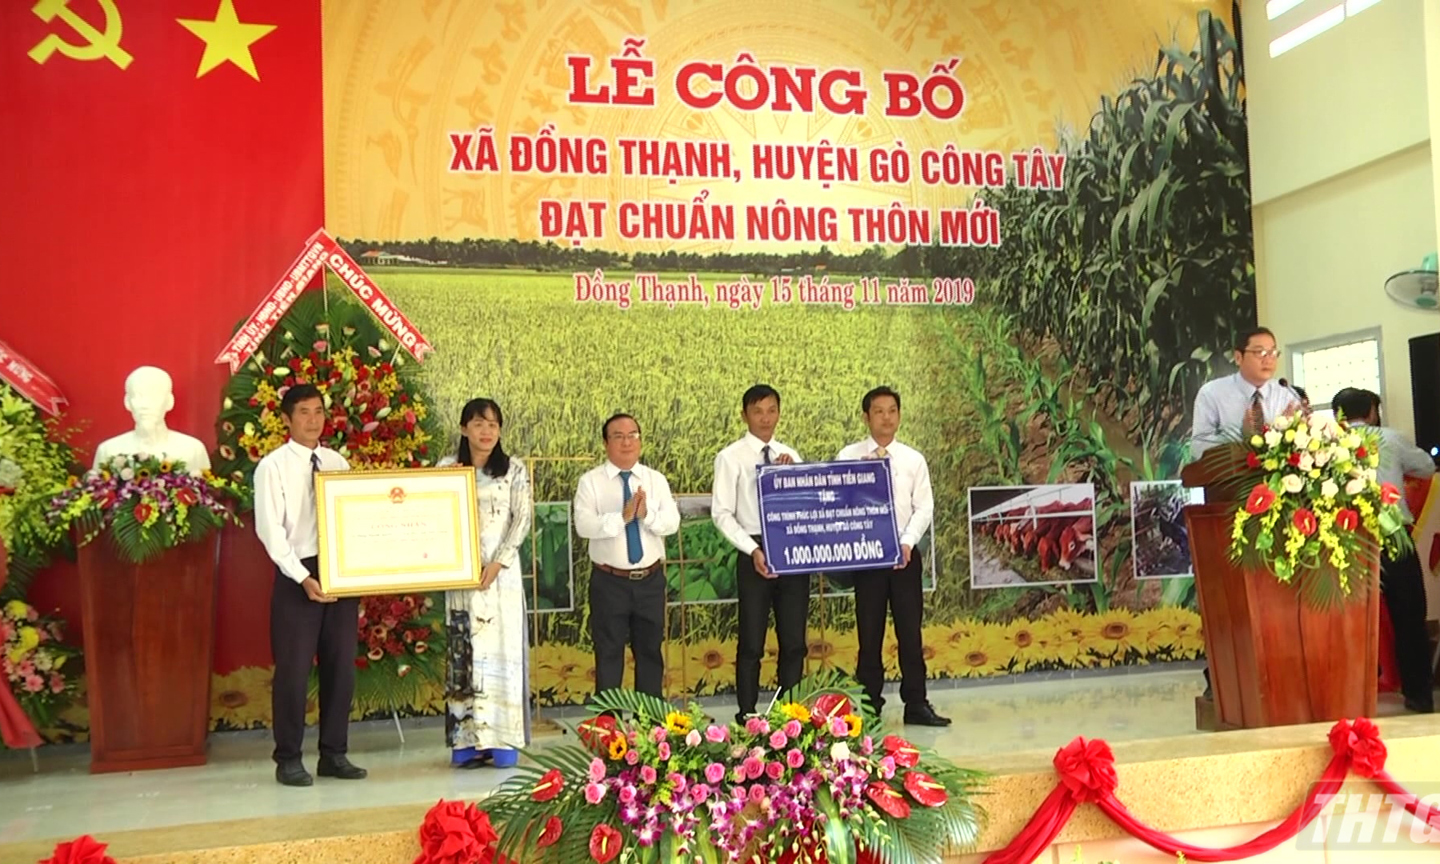 Comrde Pham Anh Tuan and comrde Tran Long Thon award certificate to Long Trung commune